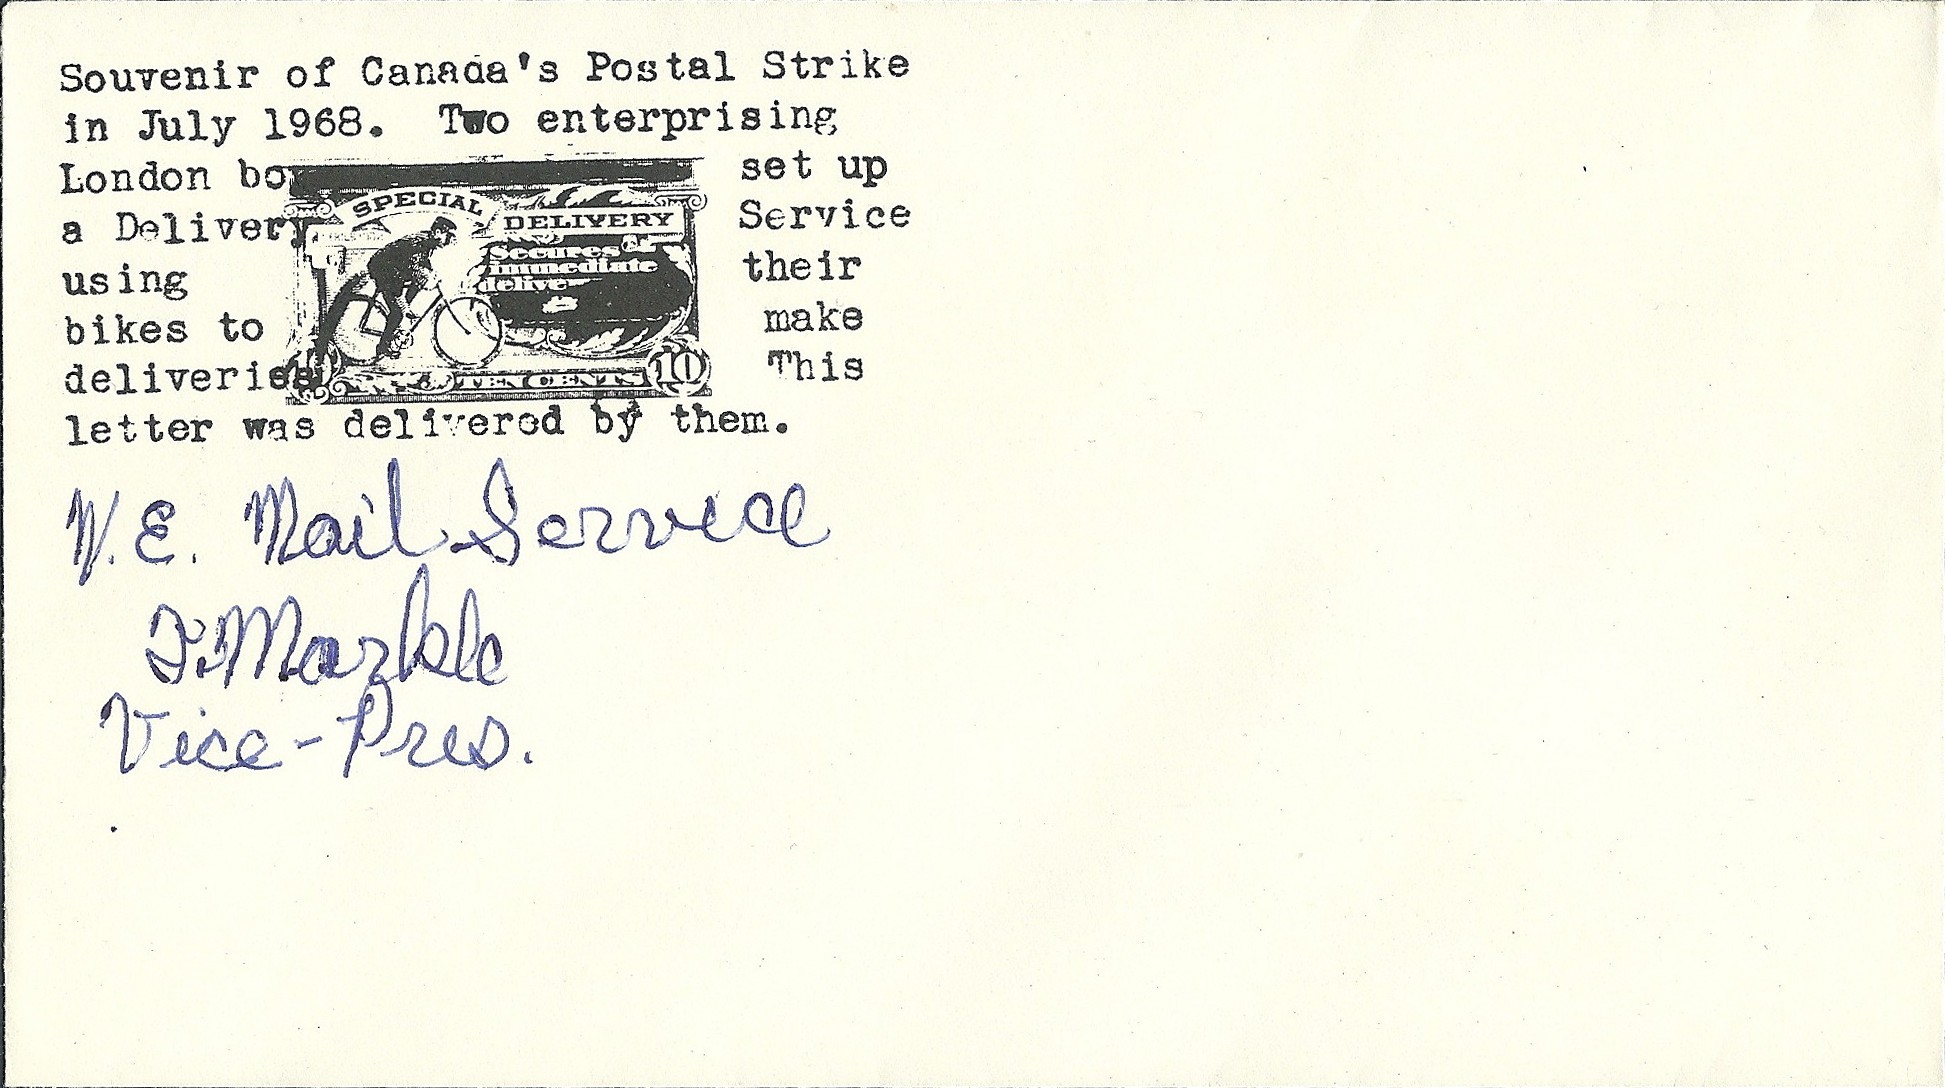 W-E-Mail-Service-London-Canada-Ontario-post-strike-1968-envelope